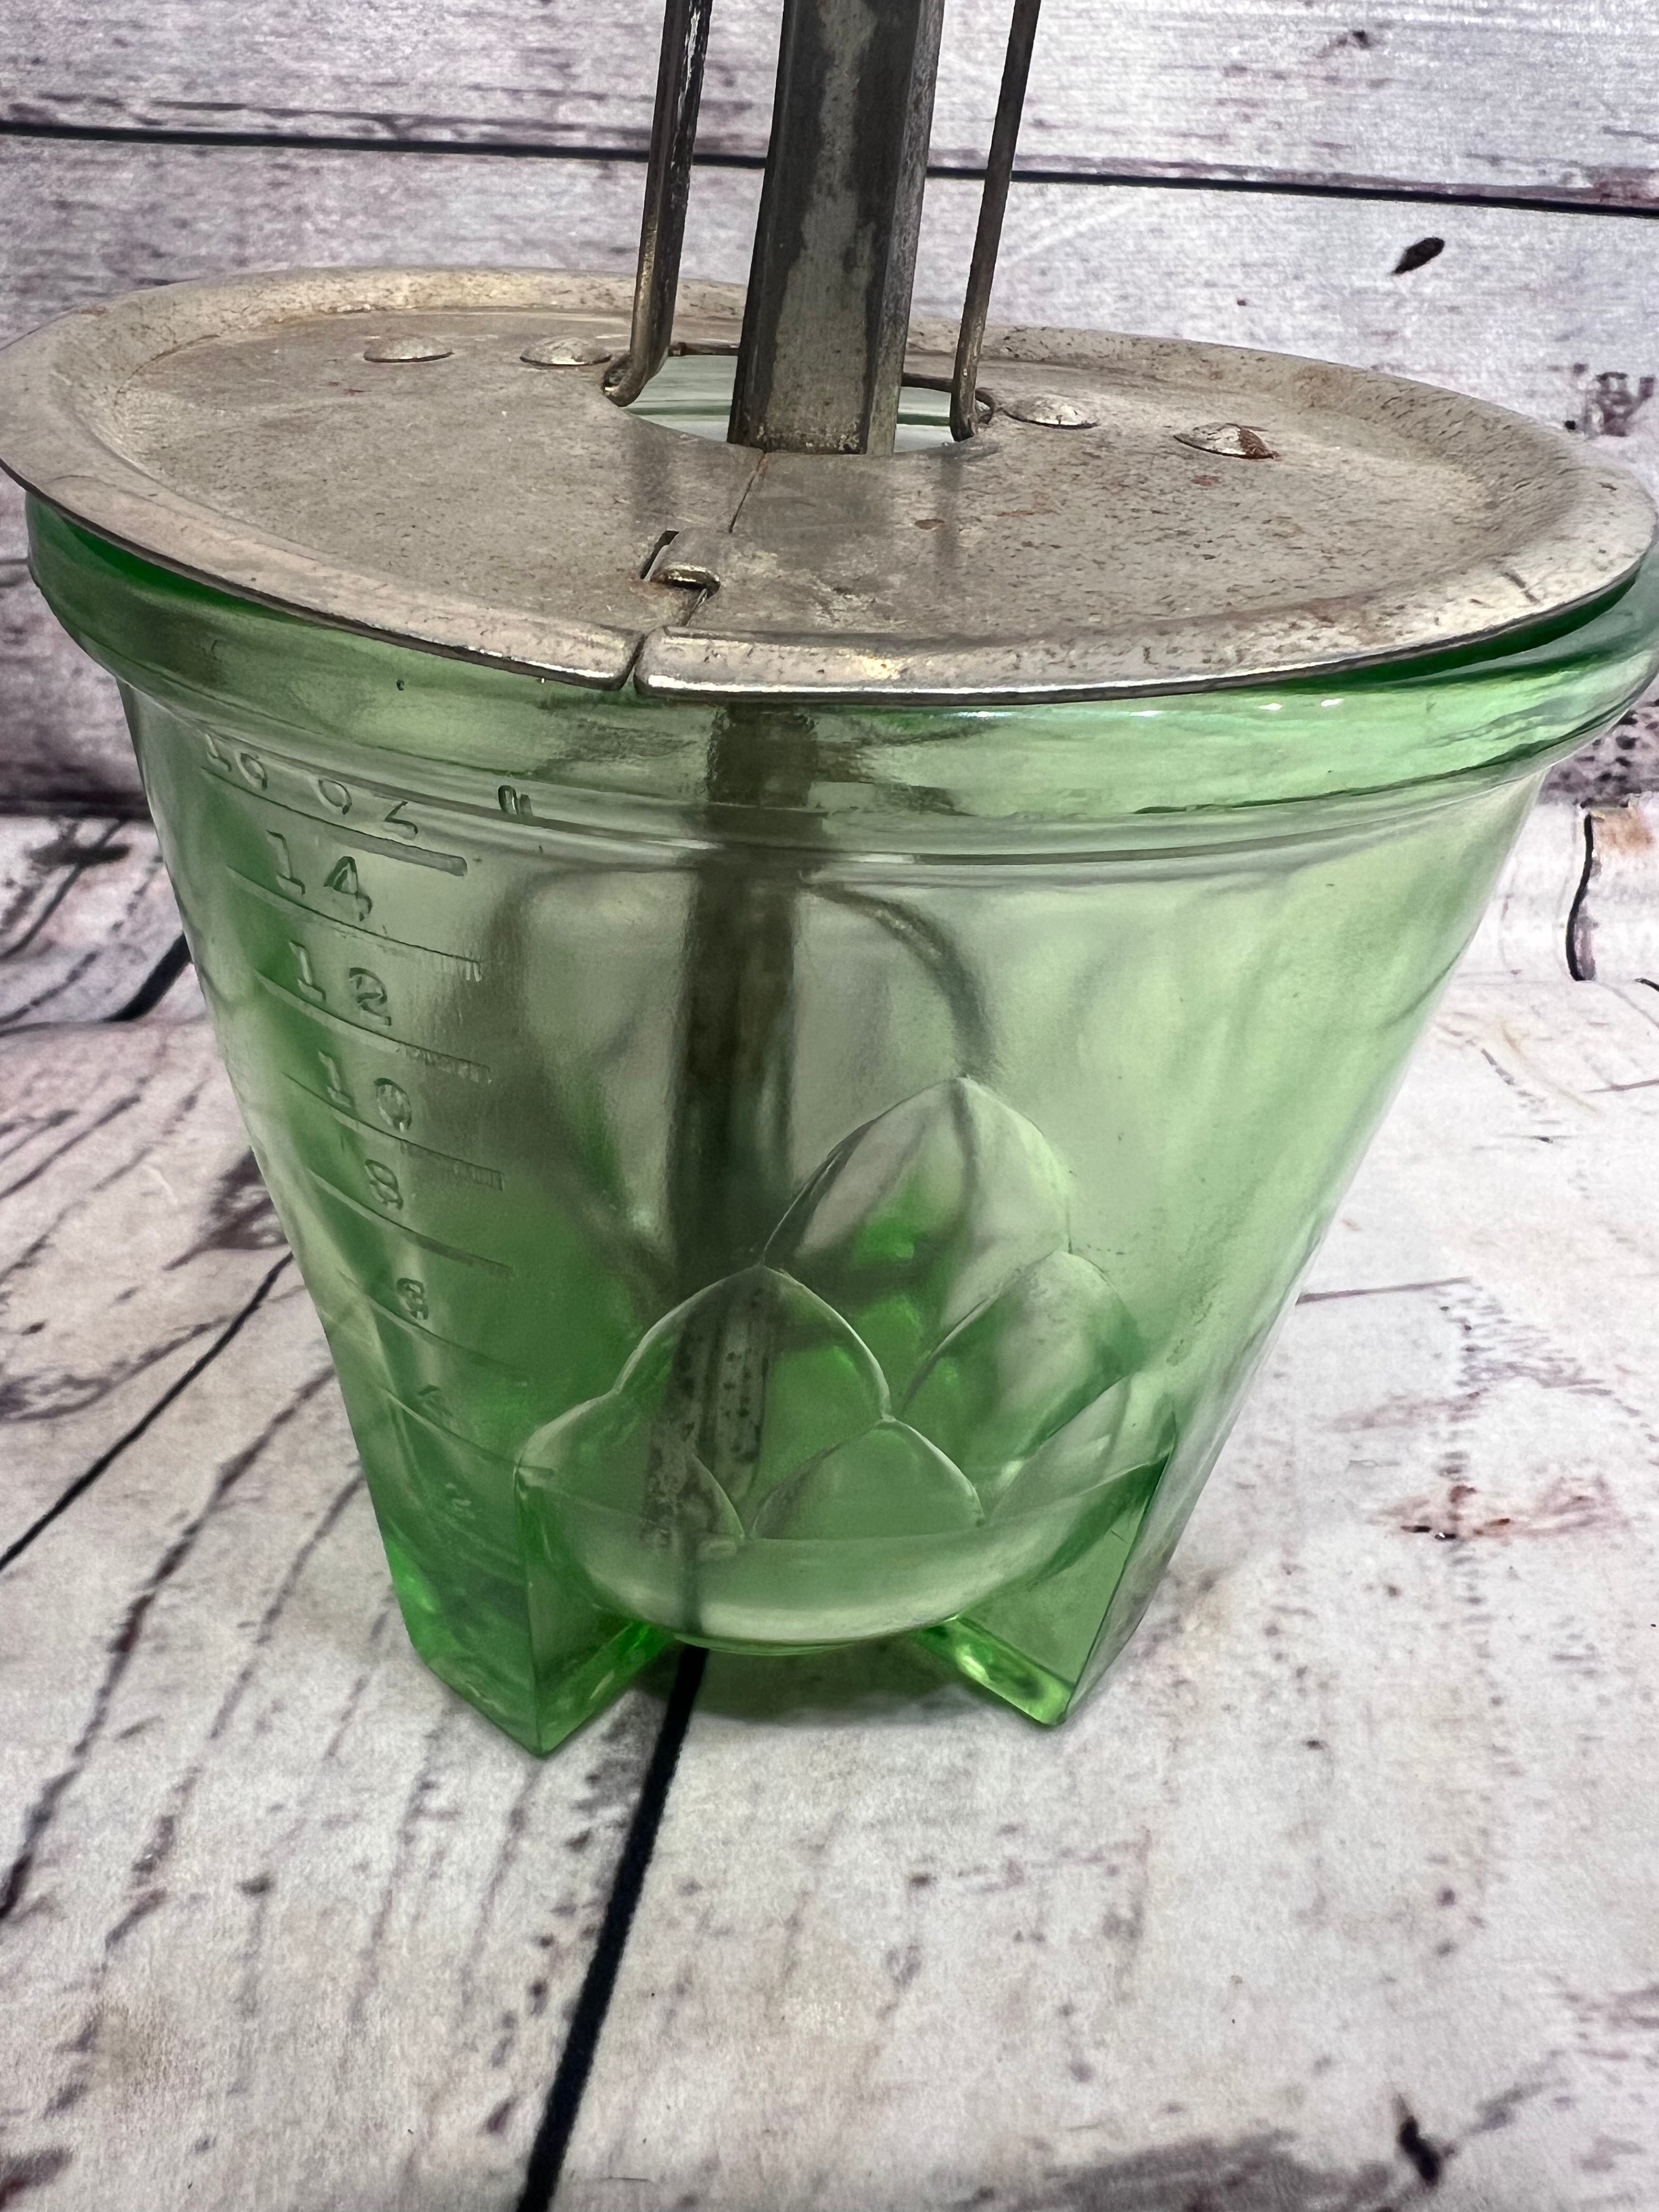 Green Depression Hand Mixer – The Nickel Barn